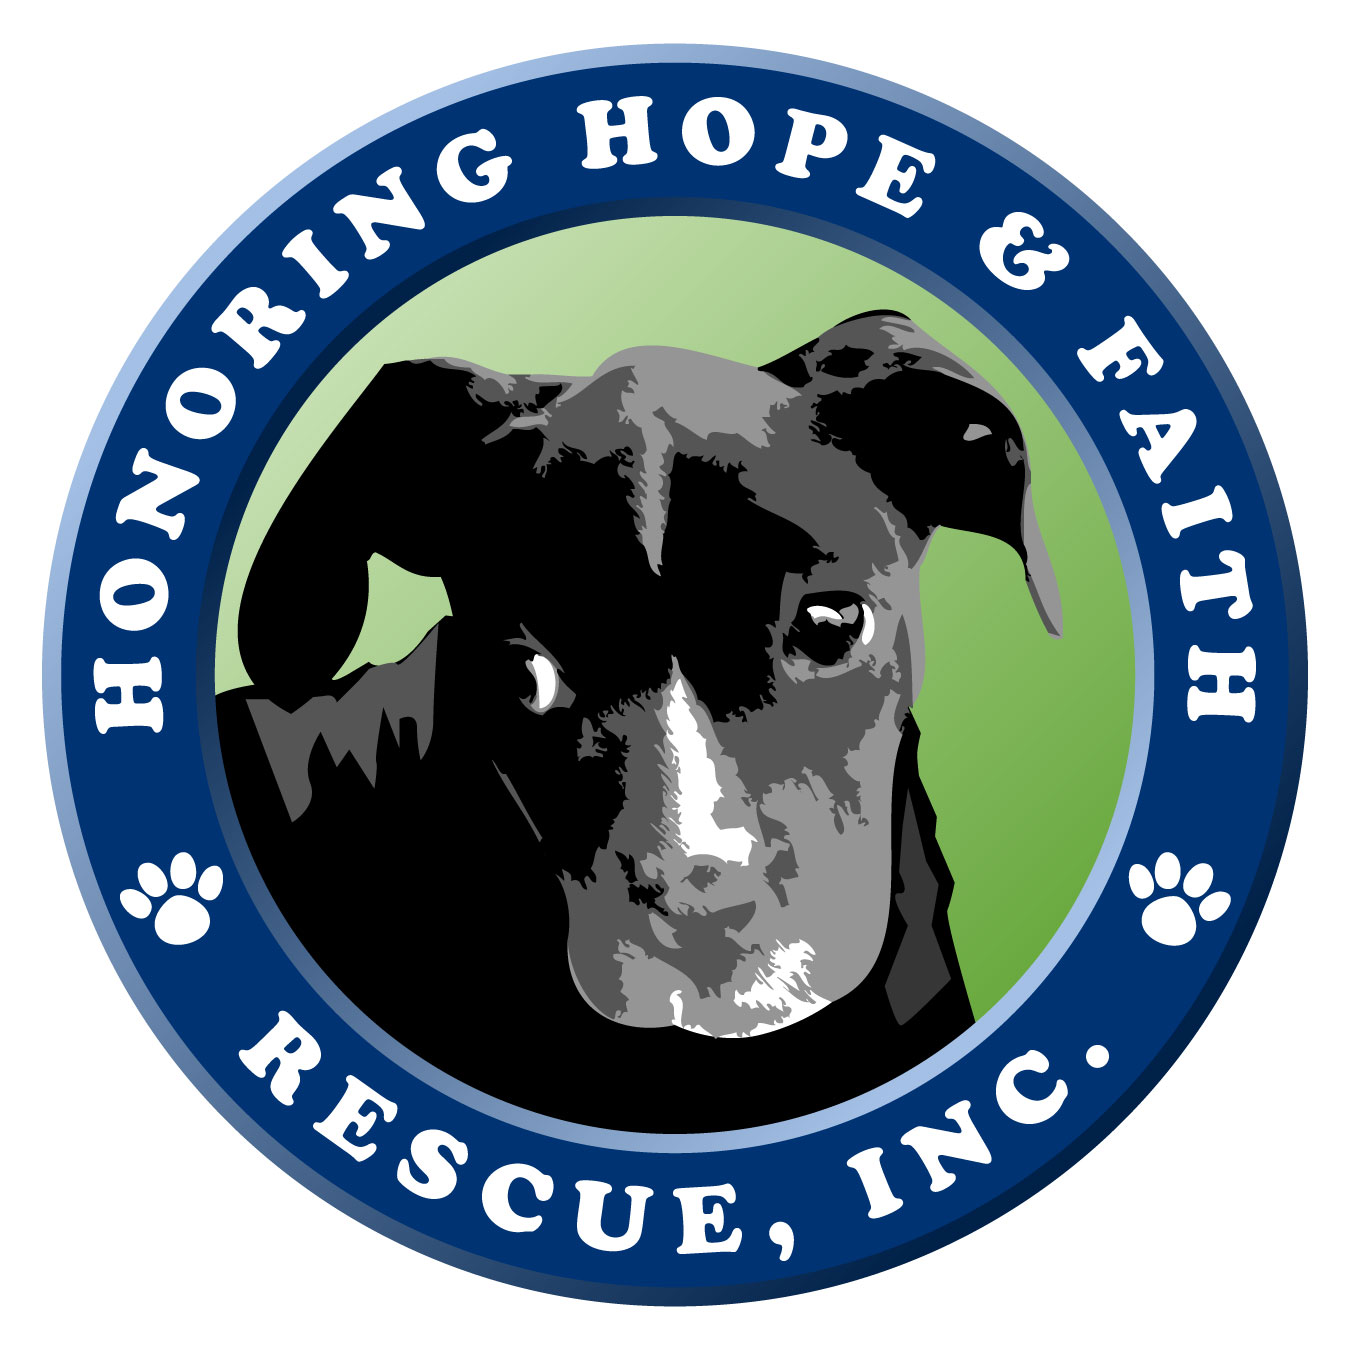 Honoring Hope and Faith Rescue, Inc.